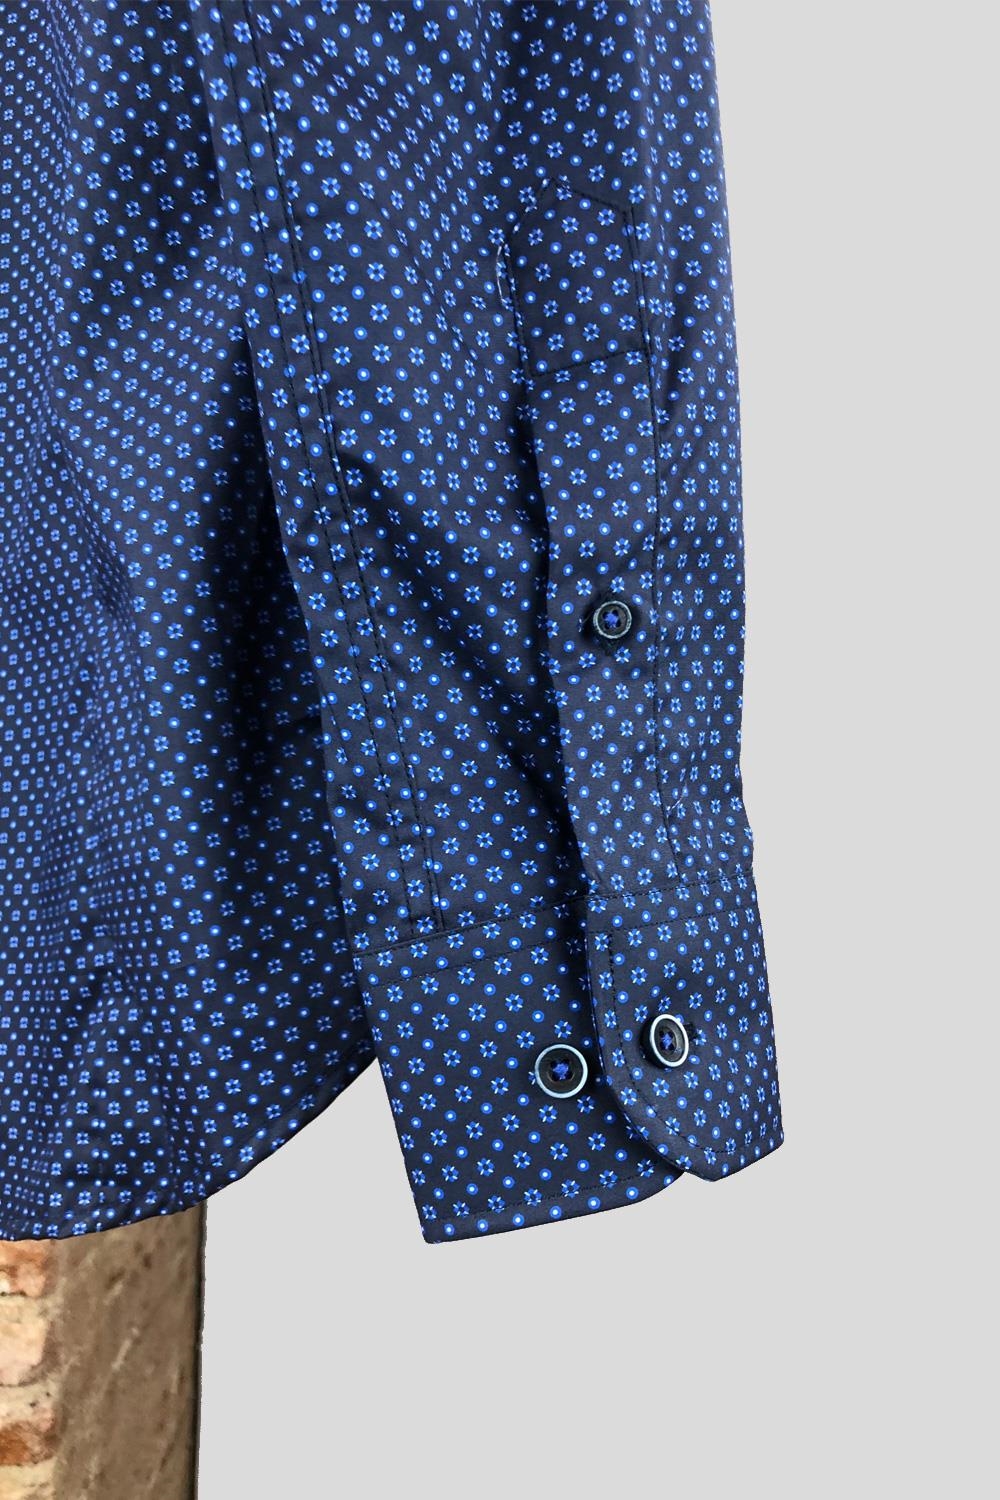 Camisa algodón 100% microdibujo azul cielo sport | 3973